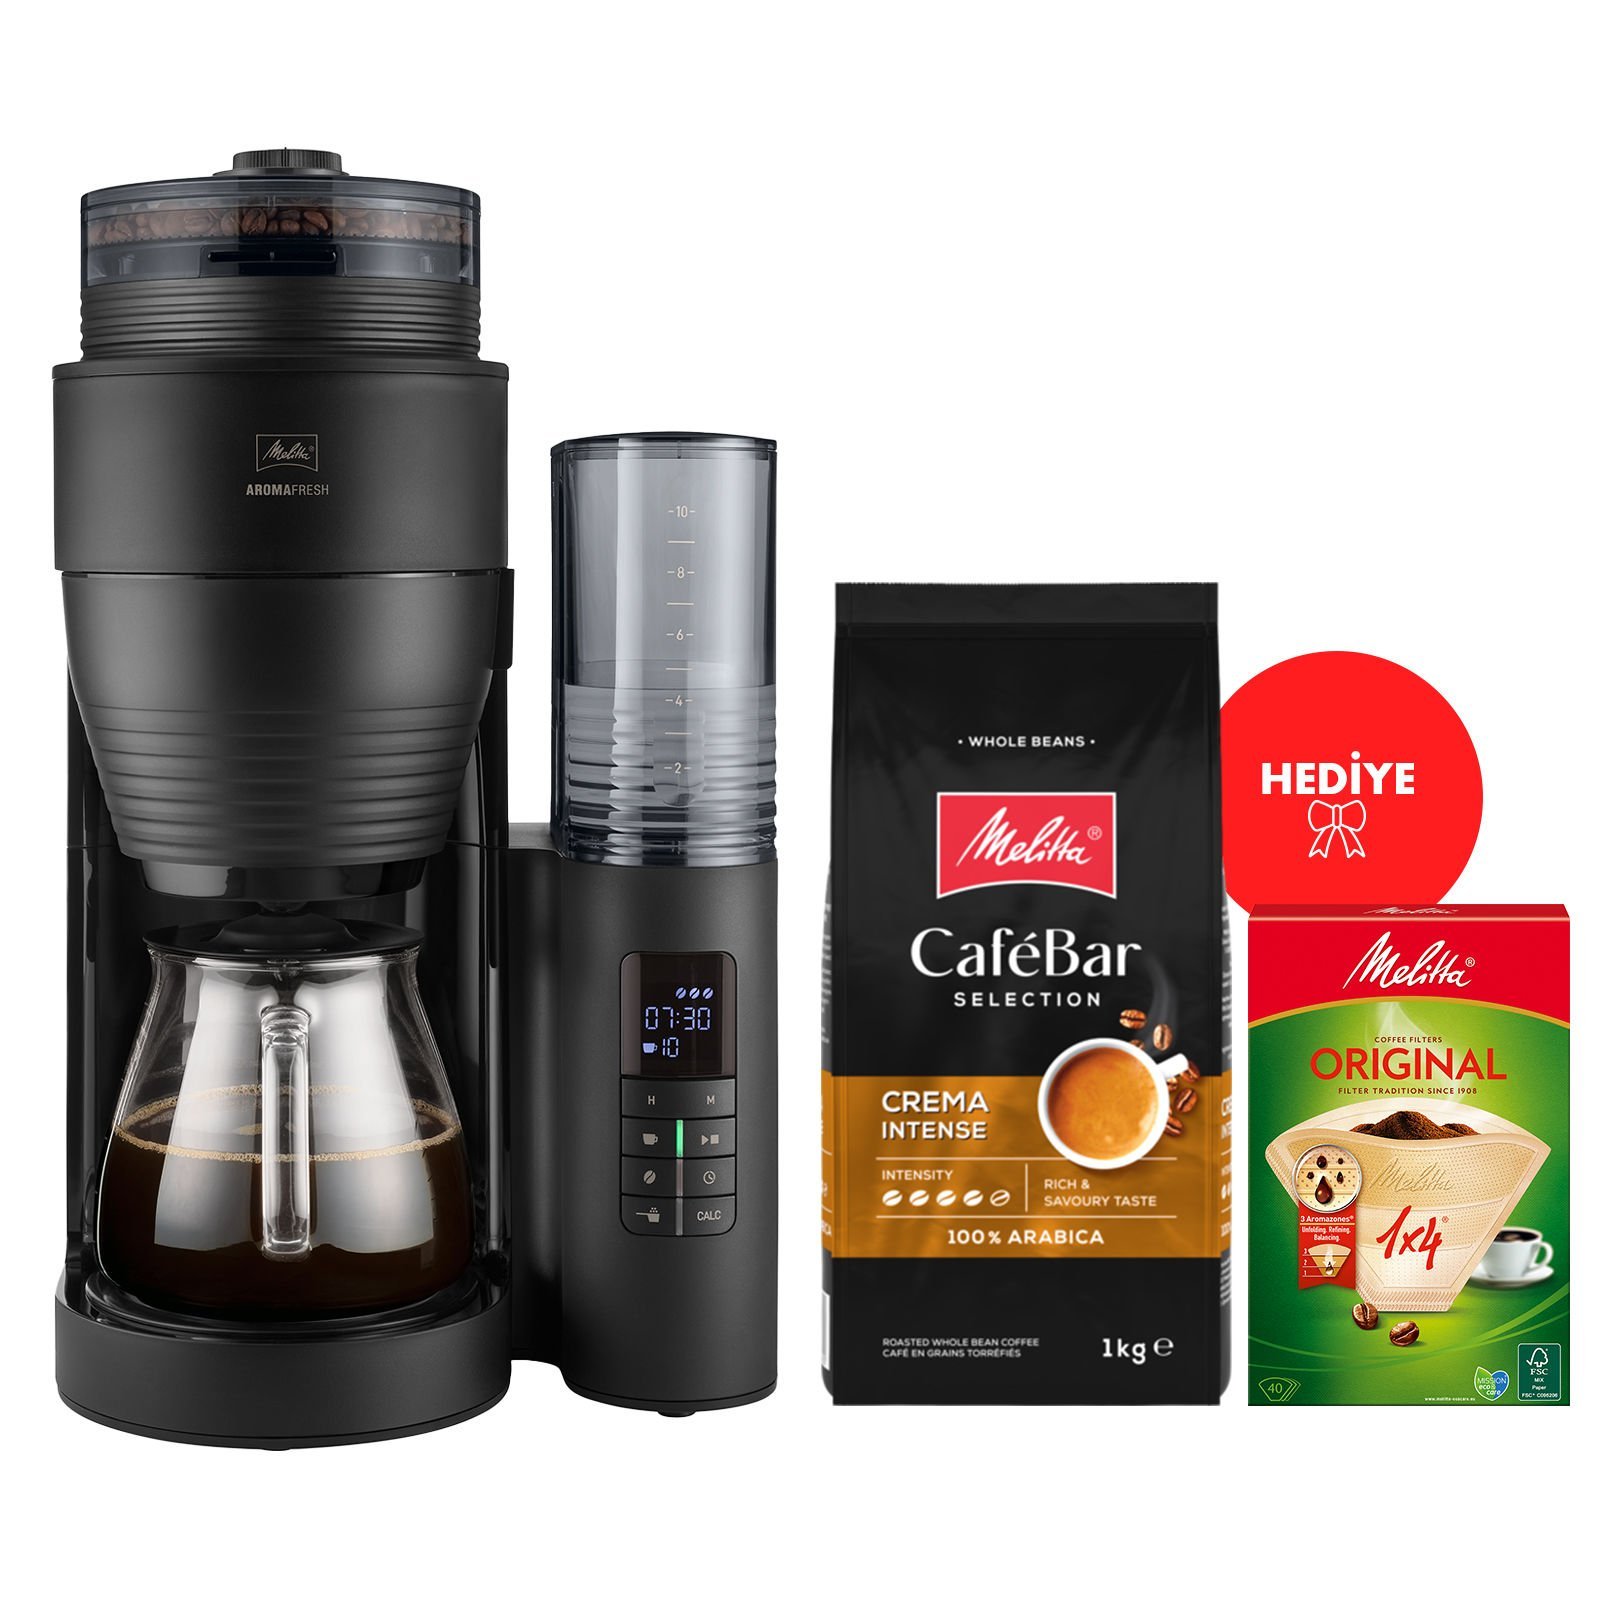 Yeni Nesil AromaFresh Siyah Filtre Kahve Makinesi  Hediyeli Kahve + Filtre